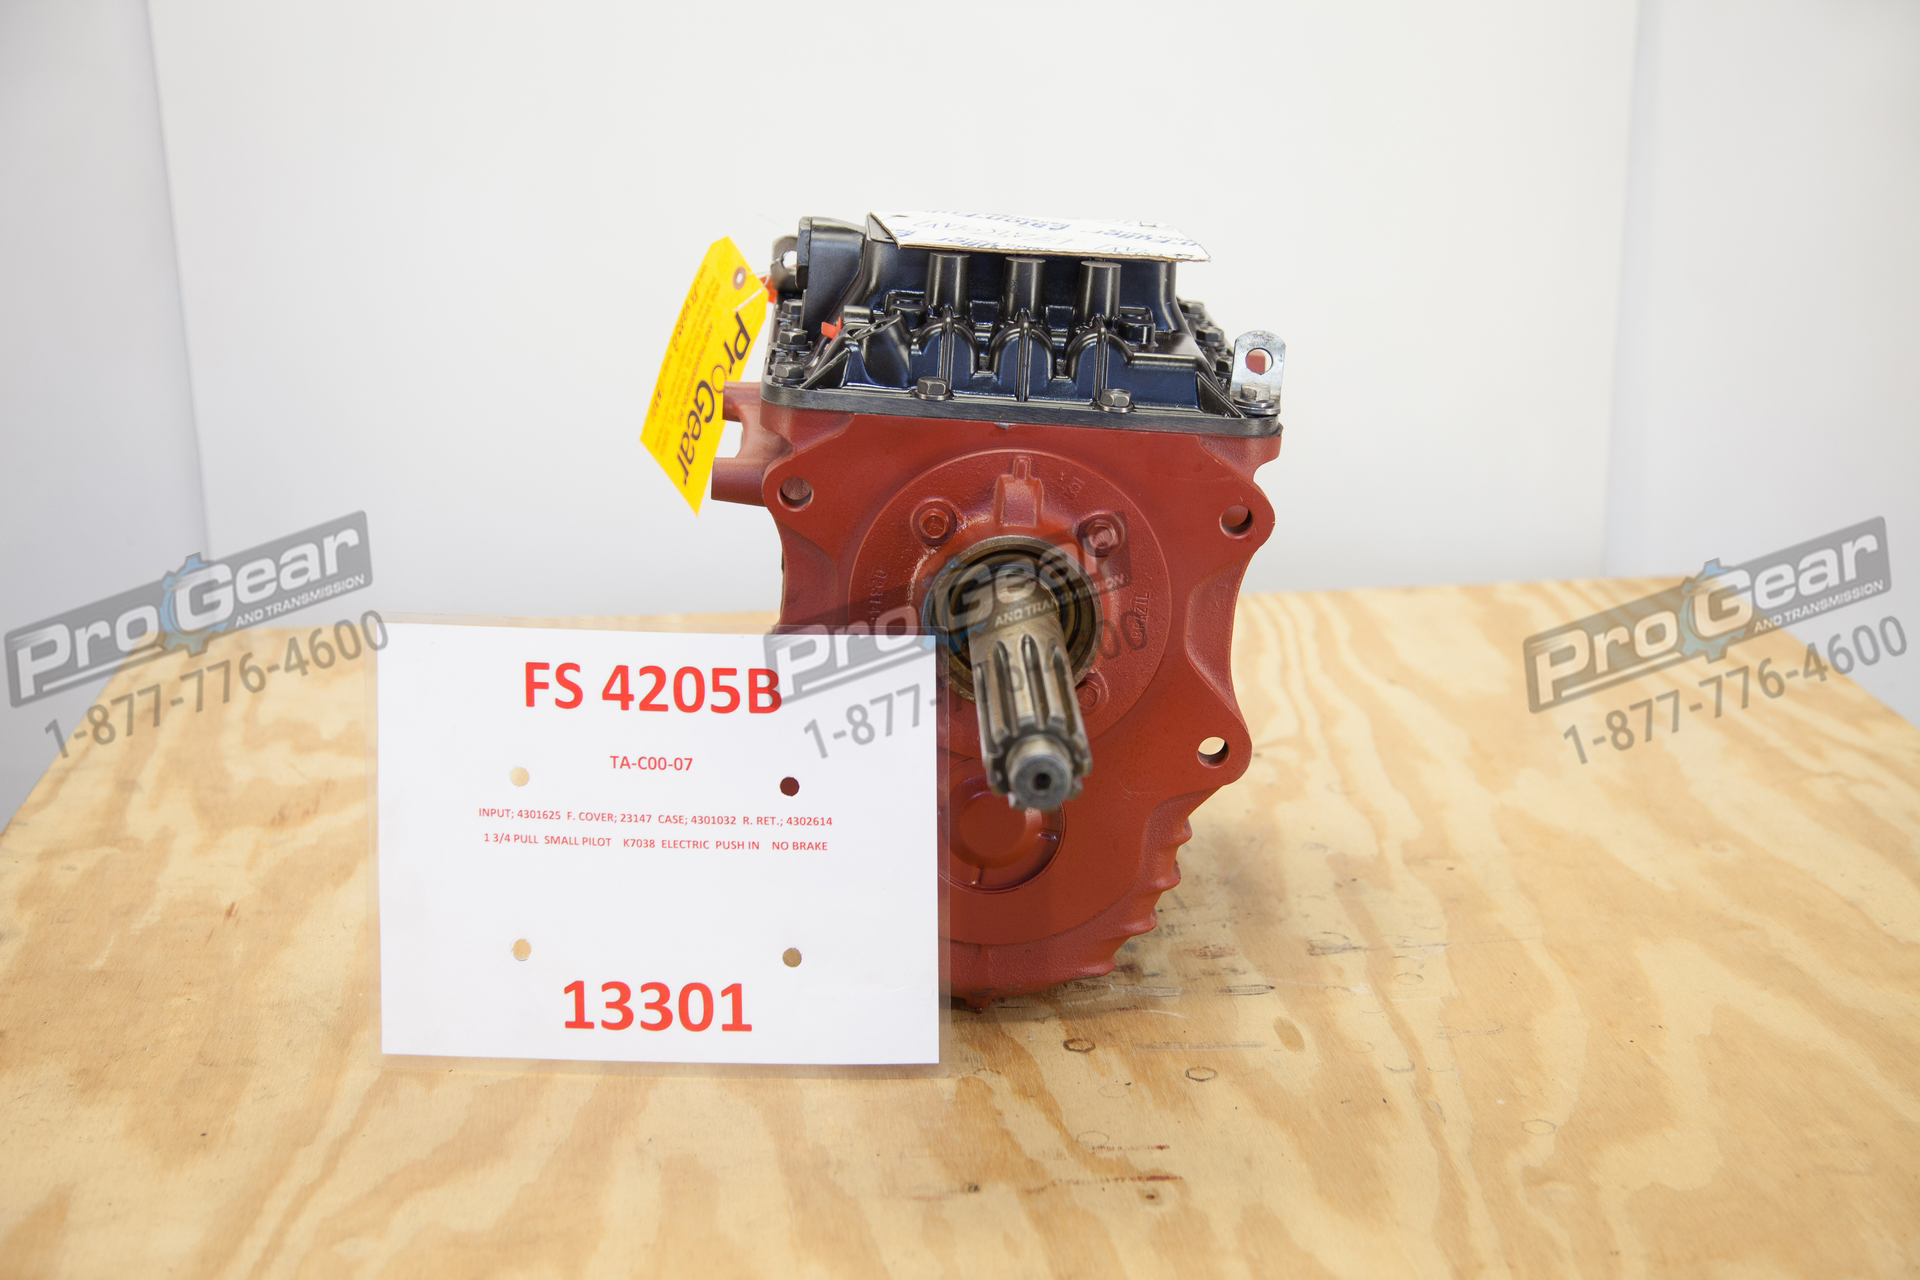 Eaton Fuller RTX-14710B transmission for sale